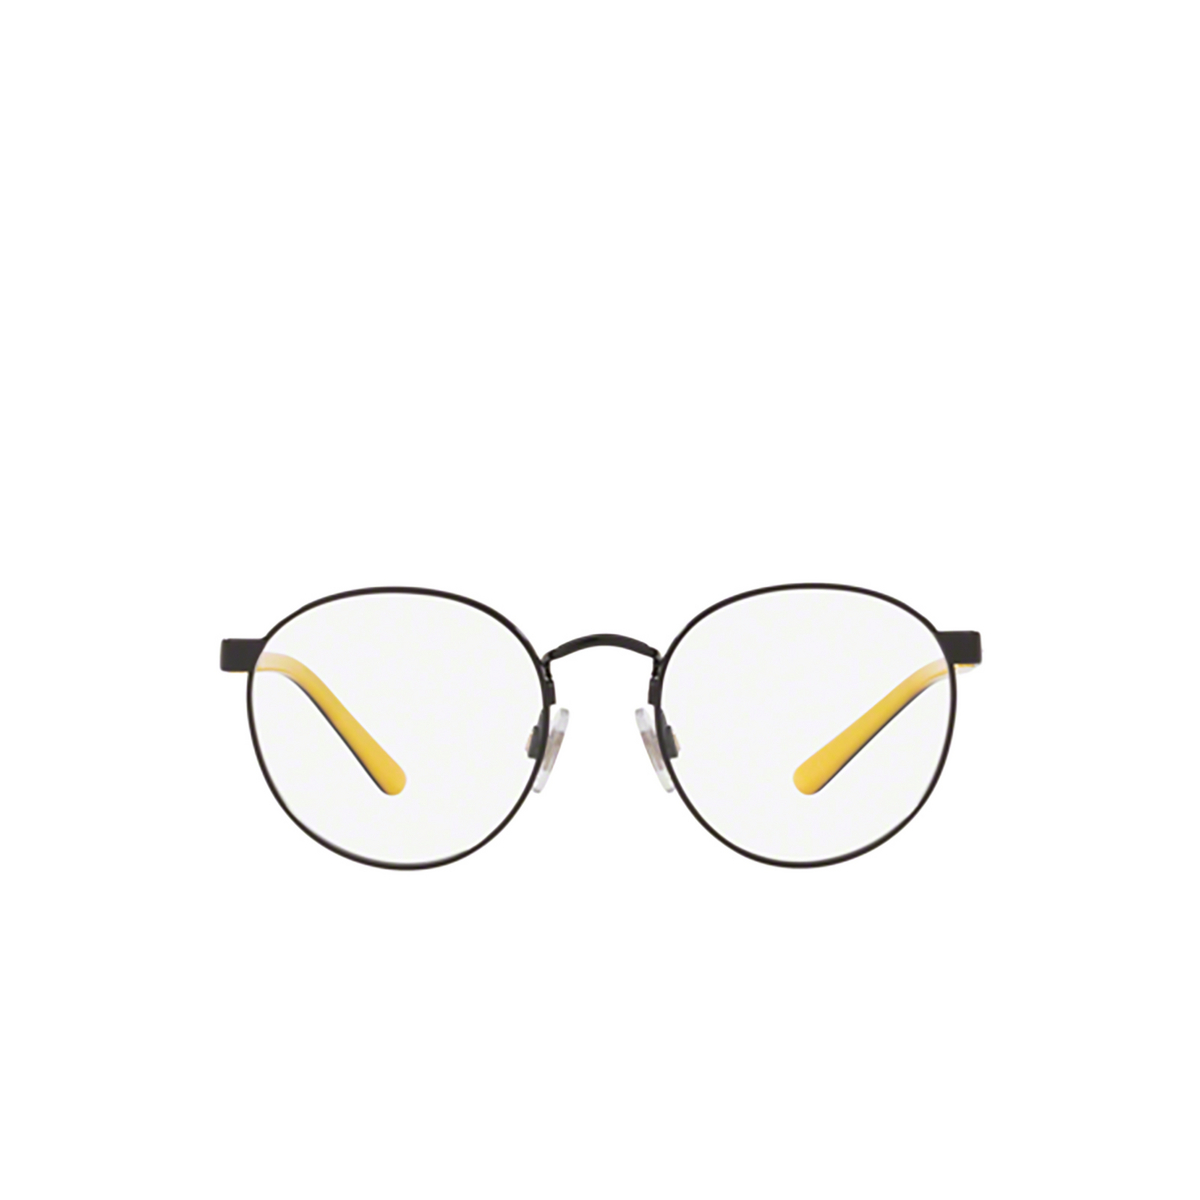 Polo Ralph Lauren® Round Eyeglasses: PP8040 color Shiny Black 9003 - front view.